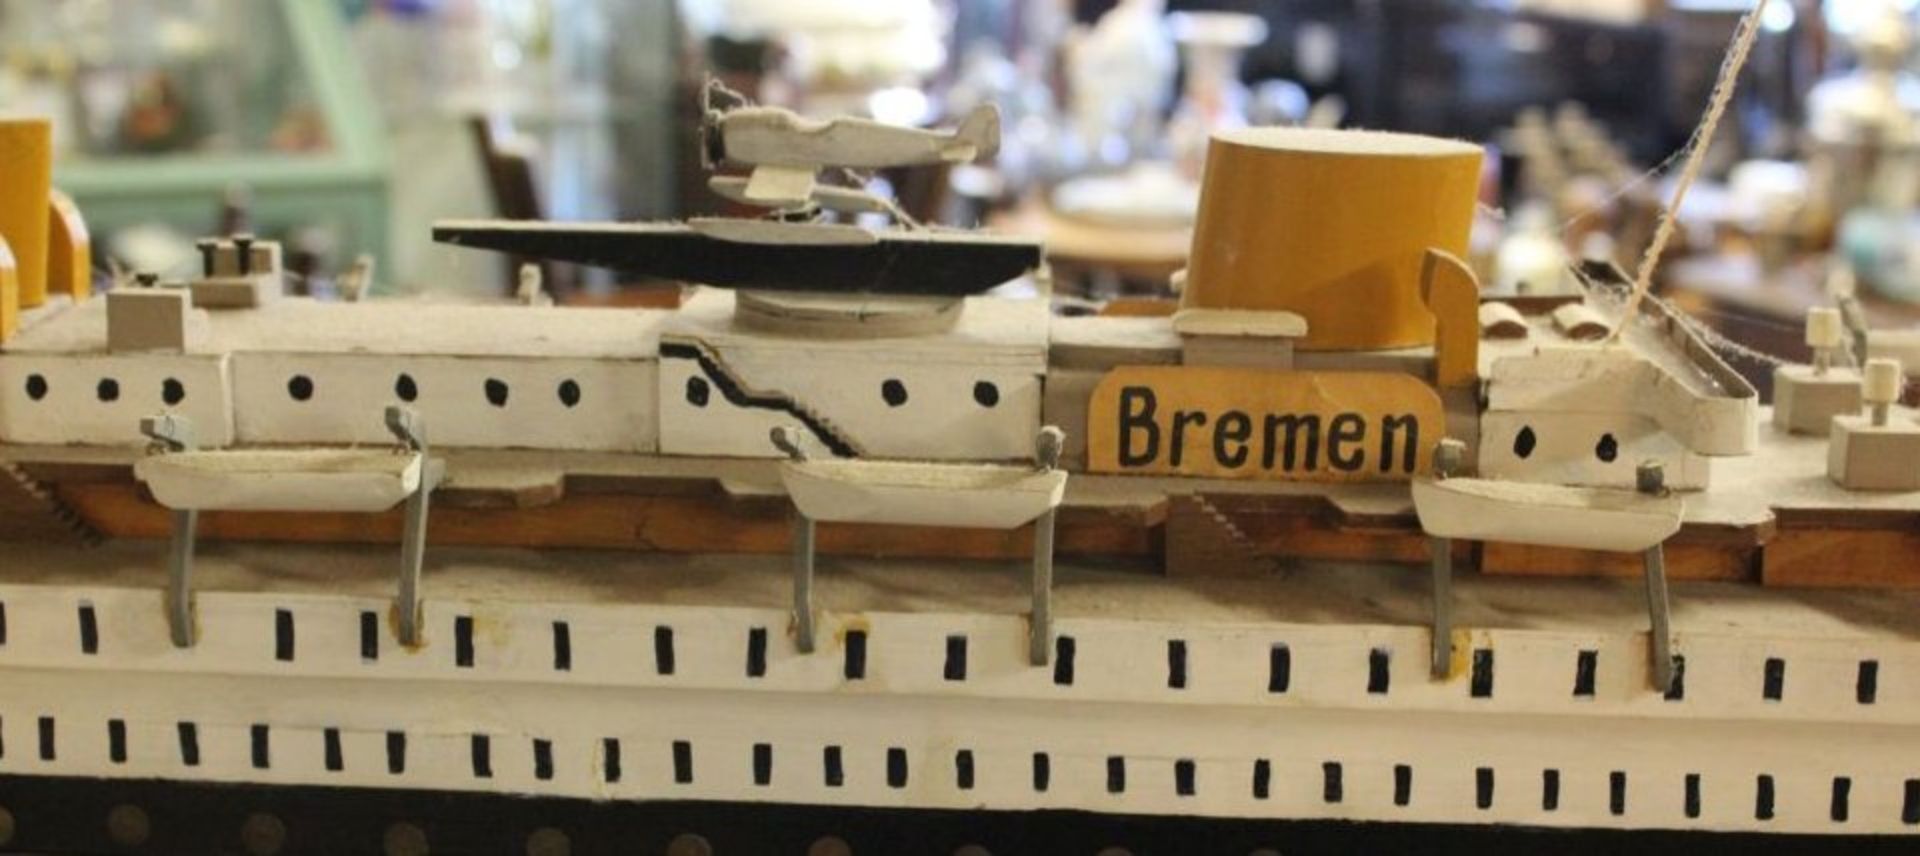 gr. Schiffmodel "Bremen", Holz, wohl Eigenbau, ca. H- 44cm L- 140cm B-20cm. - Image 2 of 4